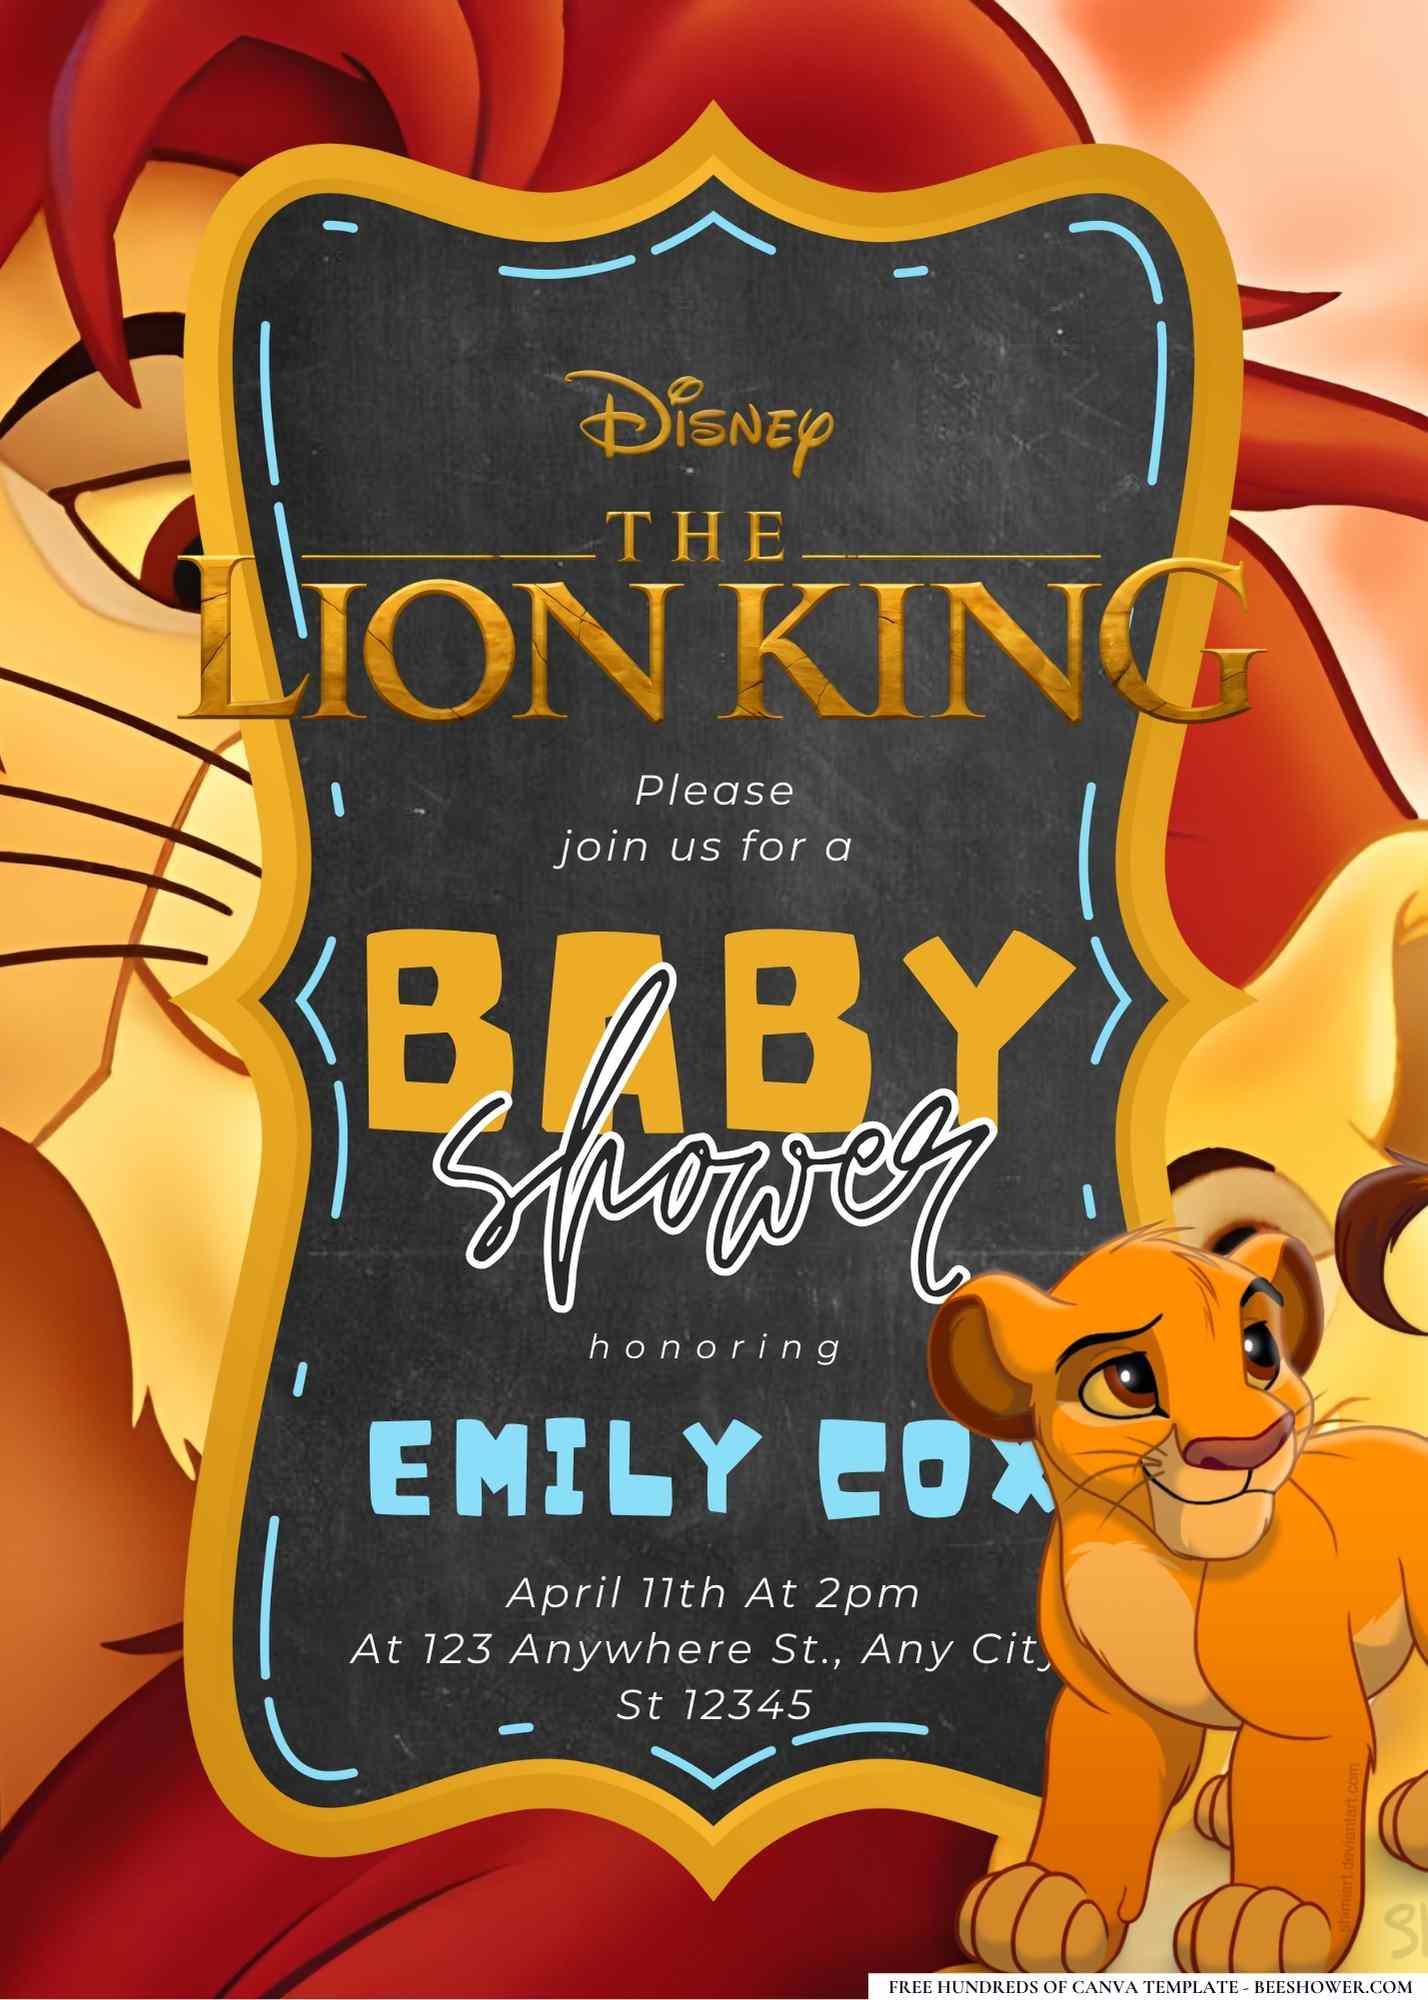 Simba (The Lion King) Baby Shower Invitation